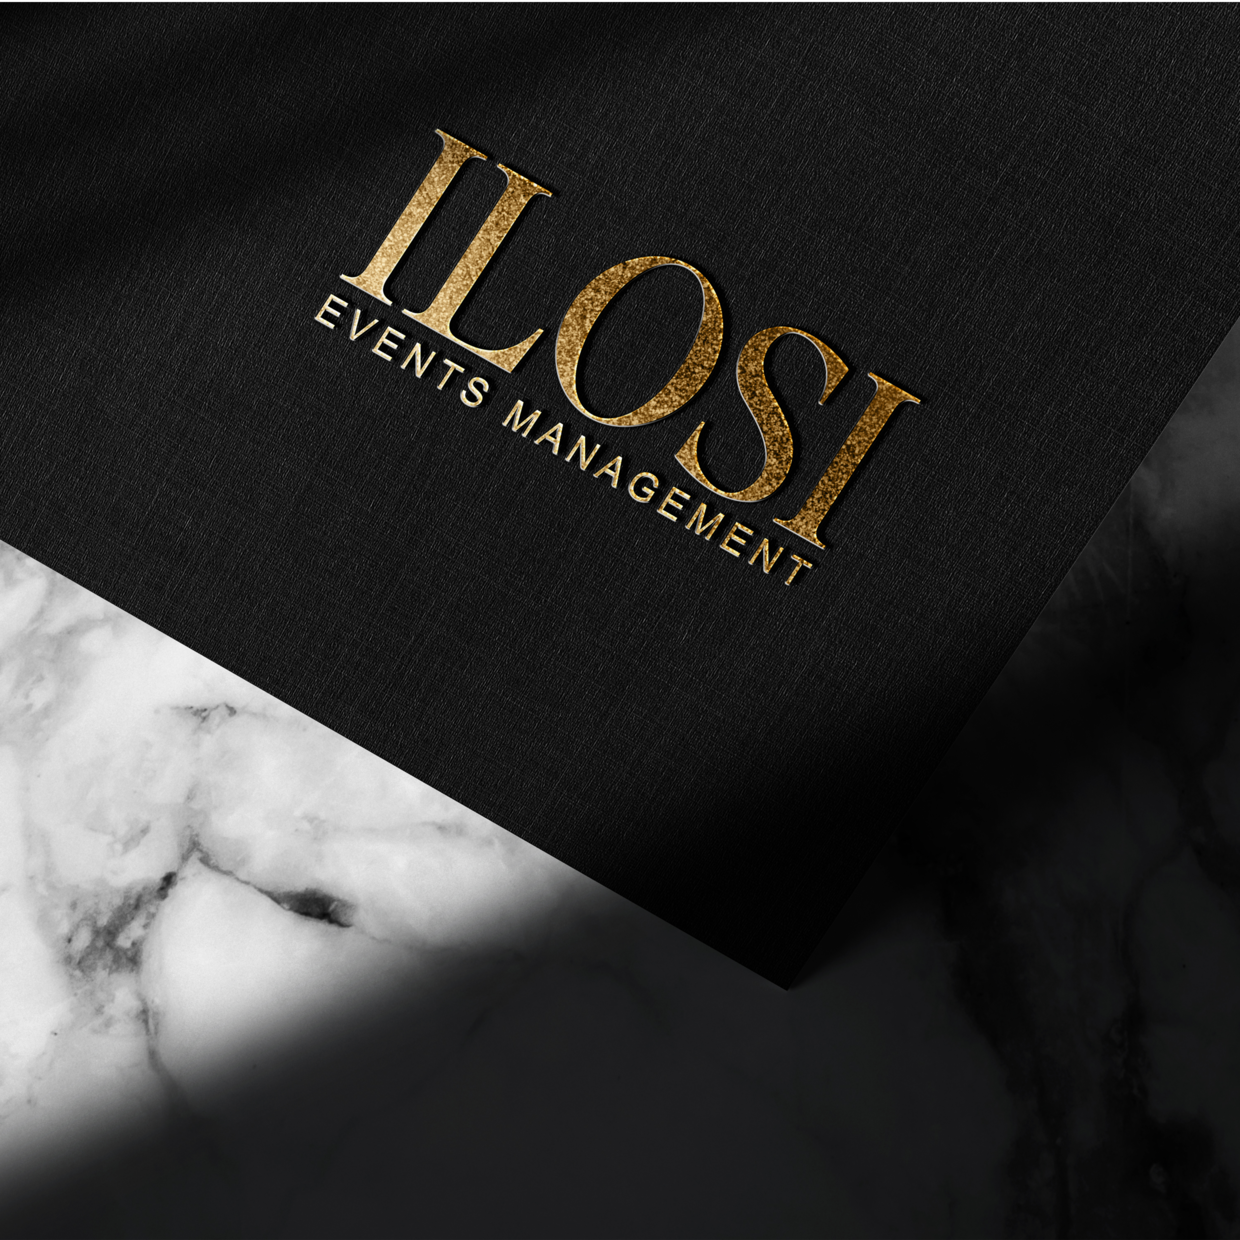 Ilosi Events Management Logo (1)